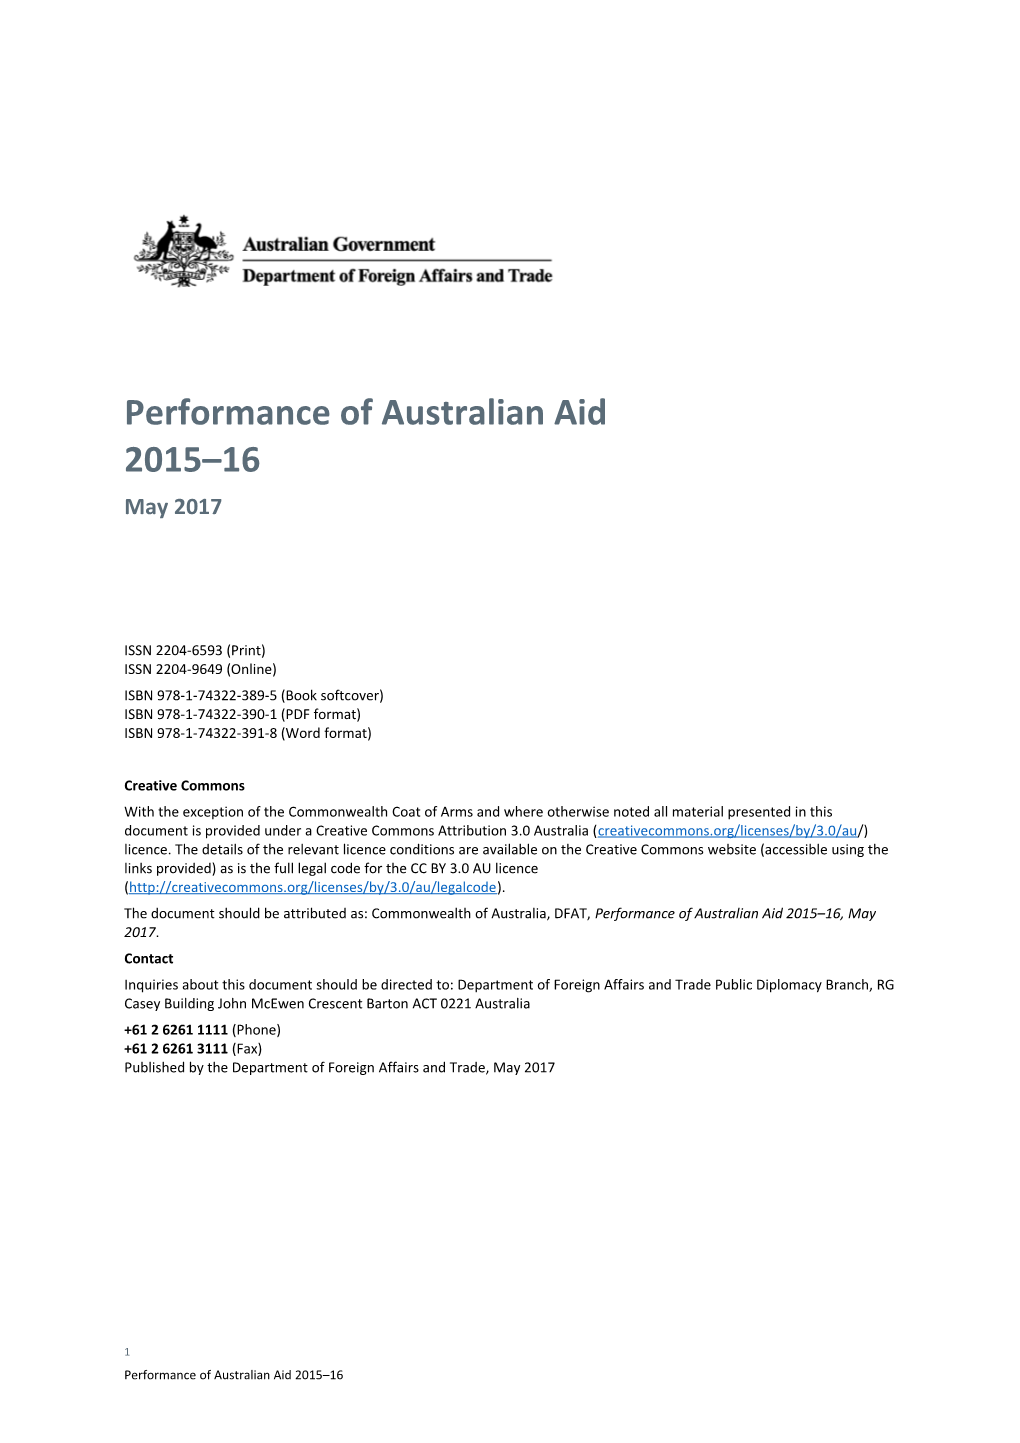 Performance of Australian Aid 2015-16